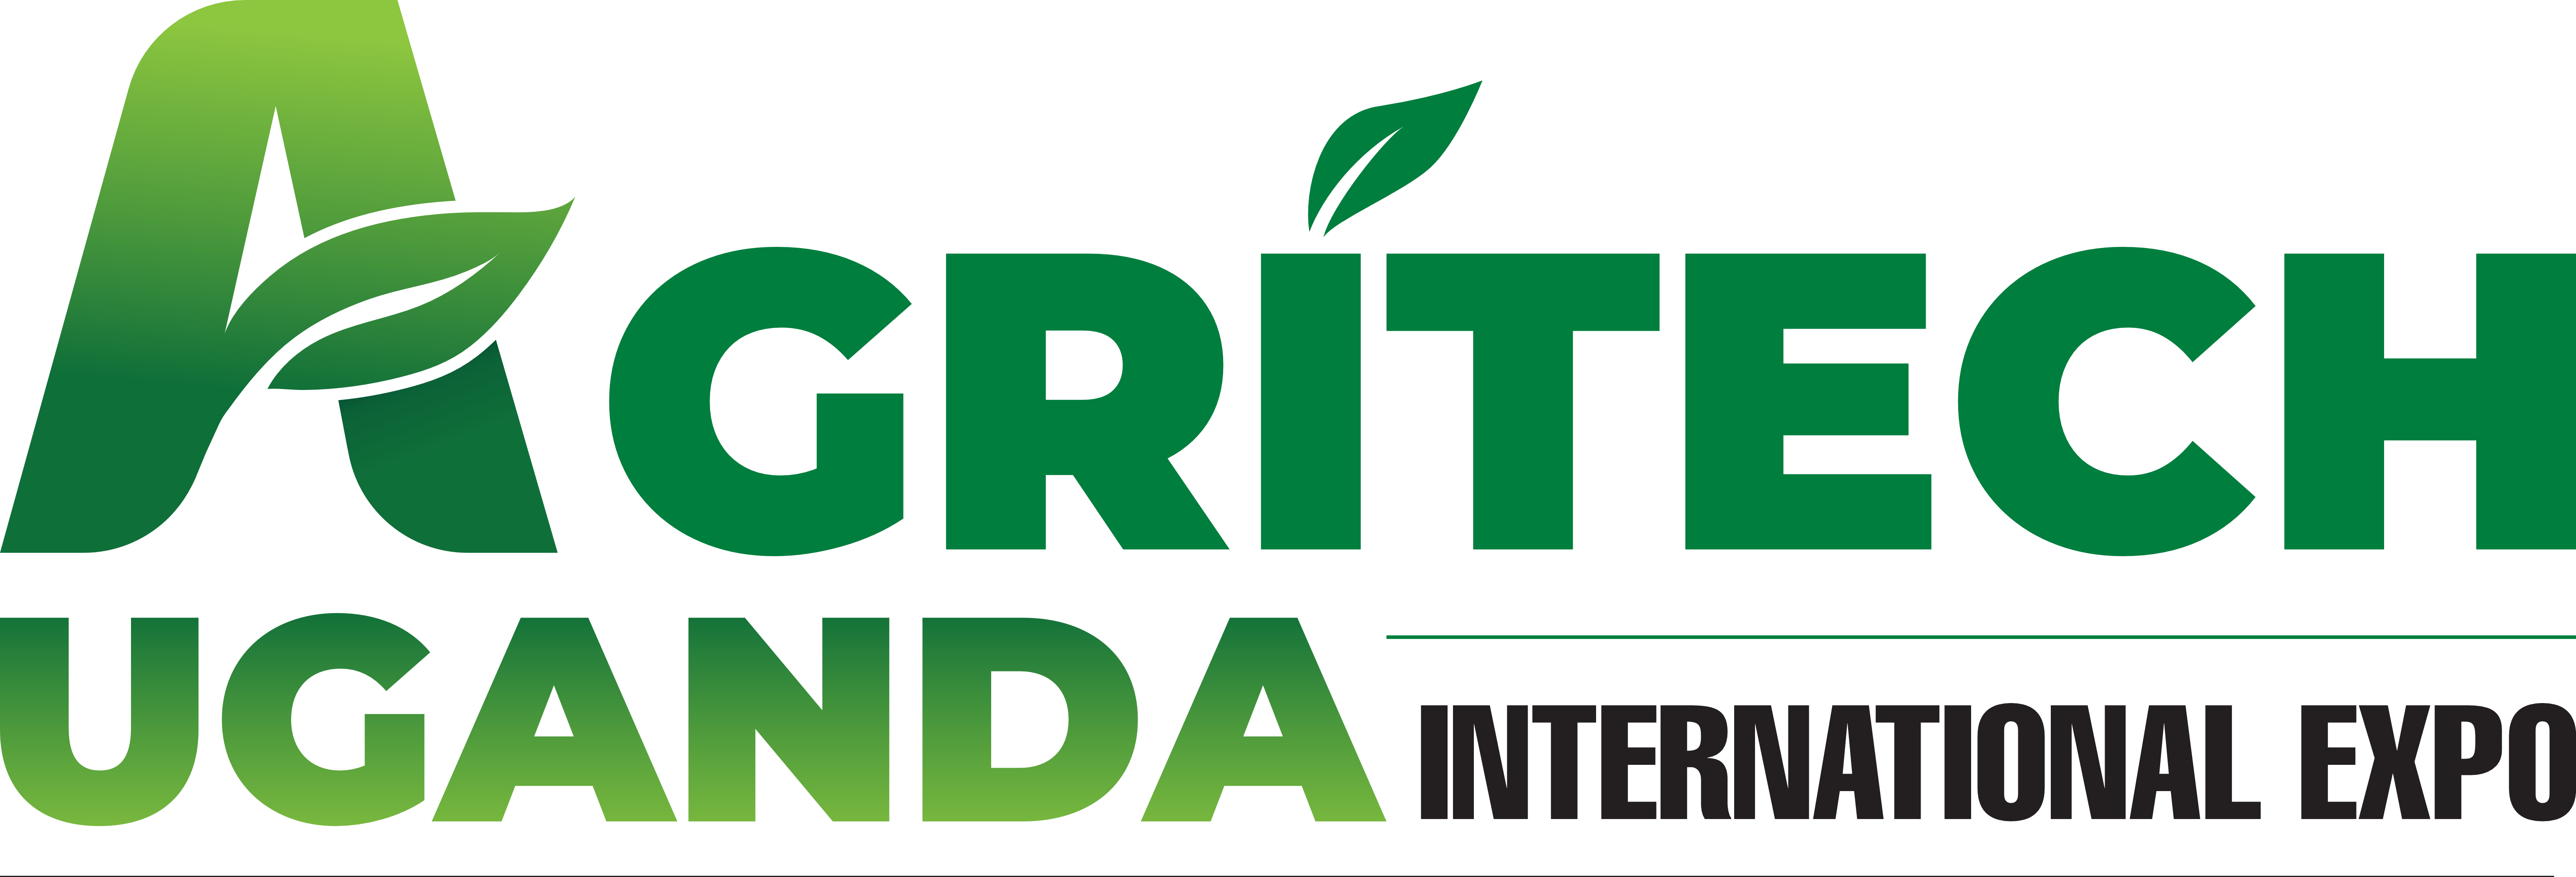 uganda-agritech-logo